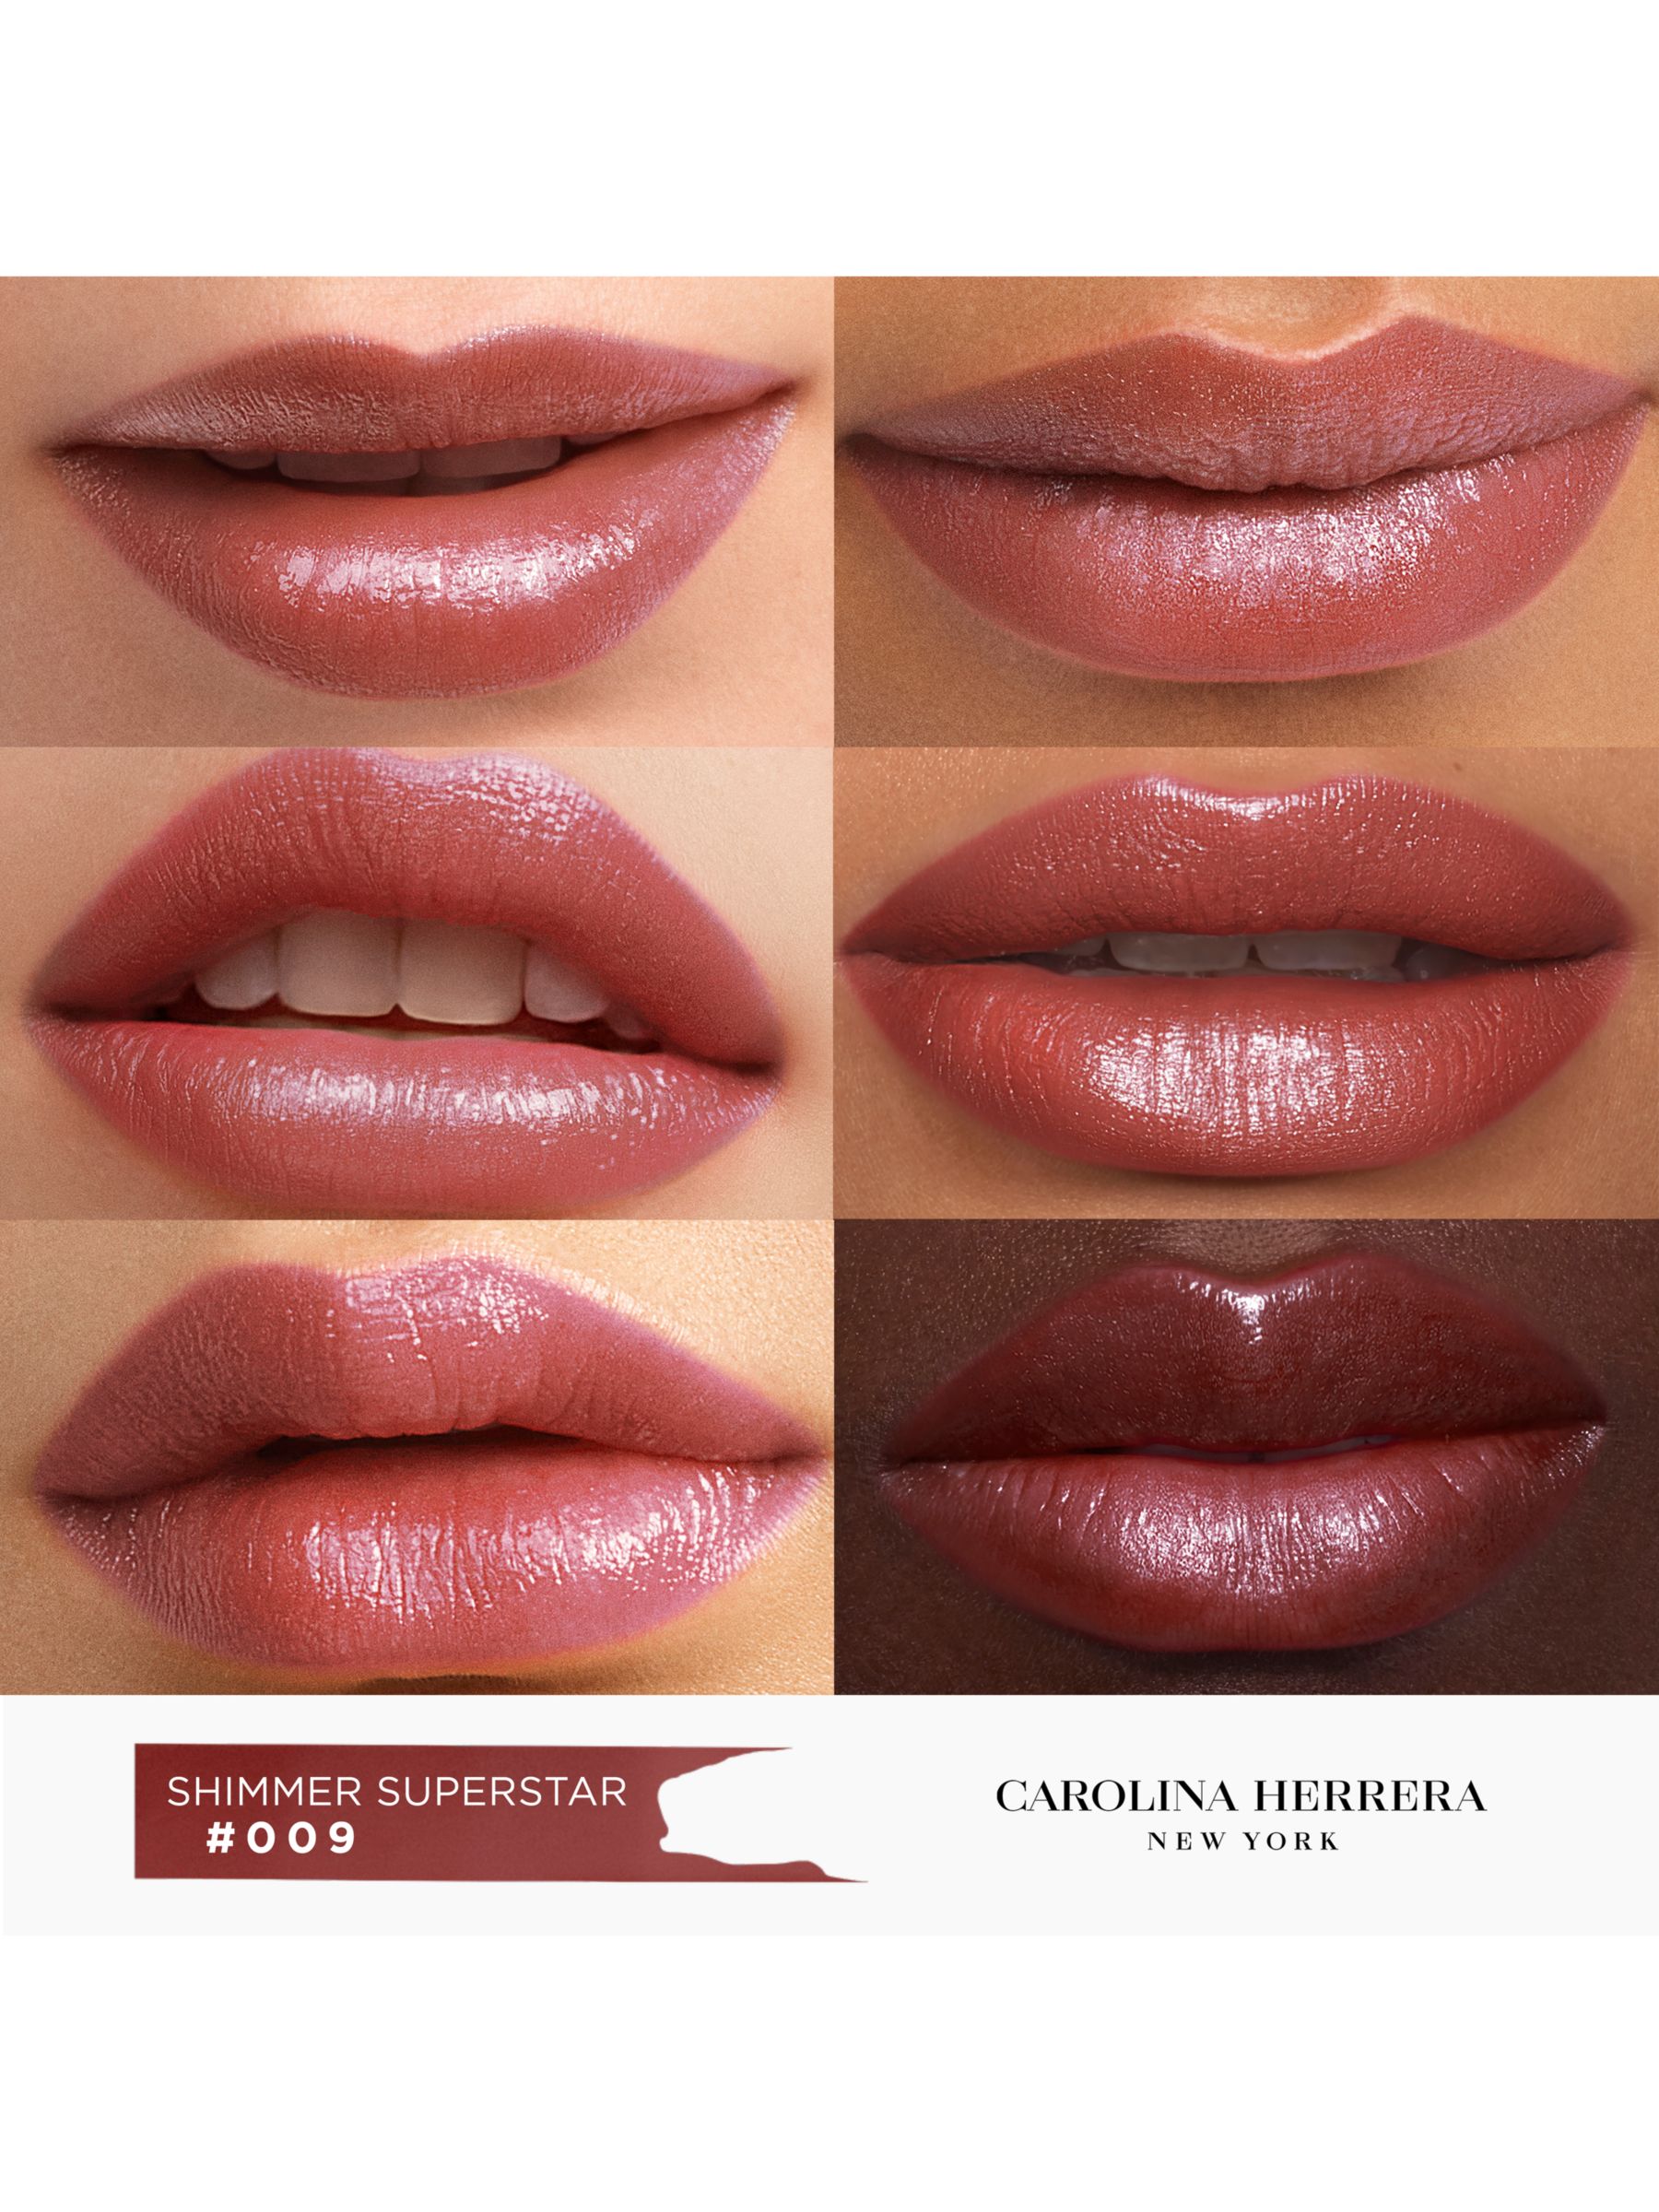 Carolina Herrera Good Girl Mini Lip Balm Superstar, 009 Show Off 2